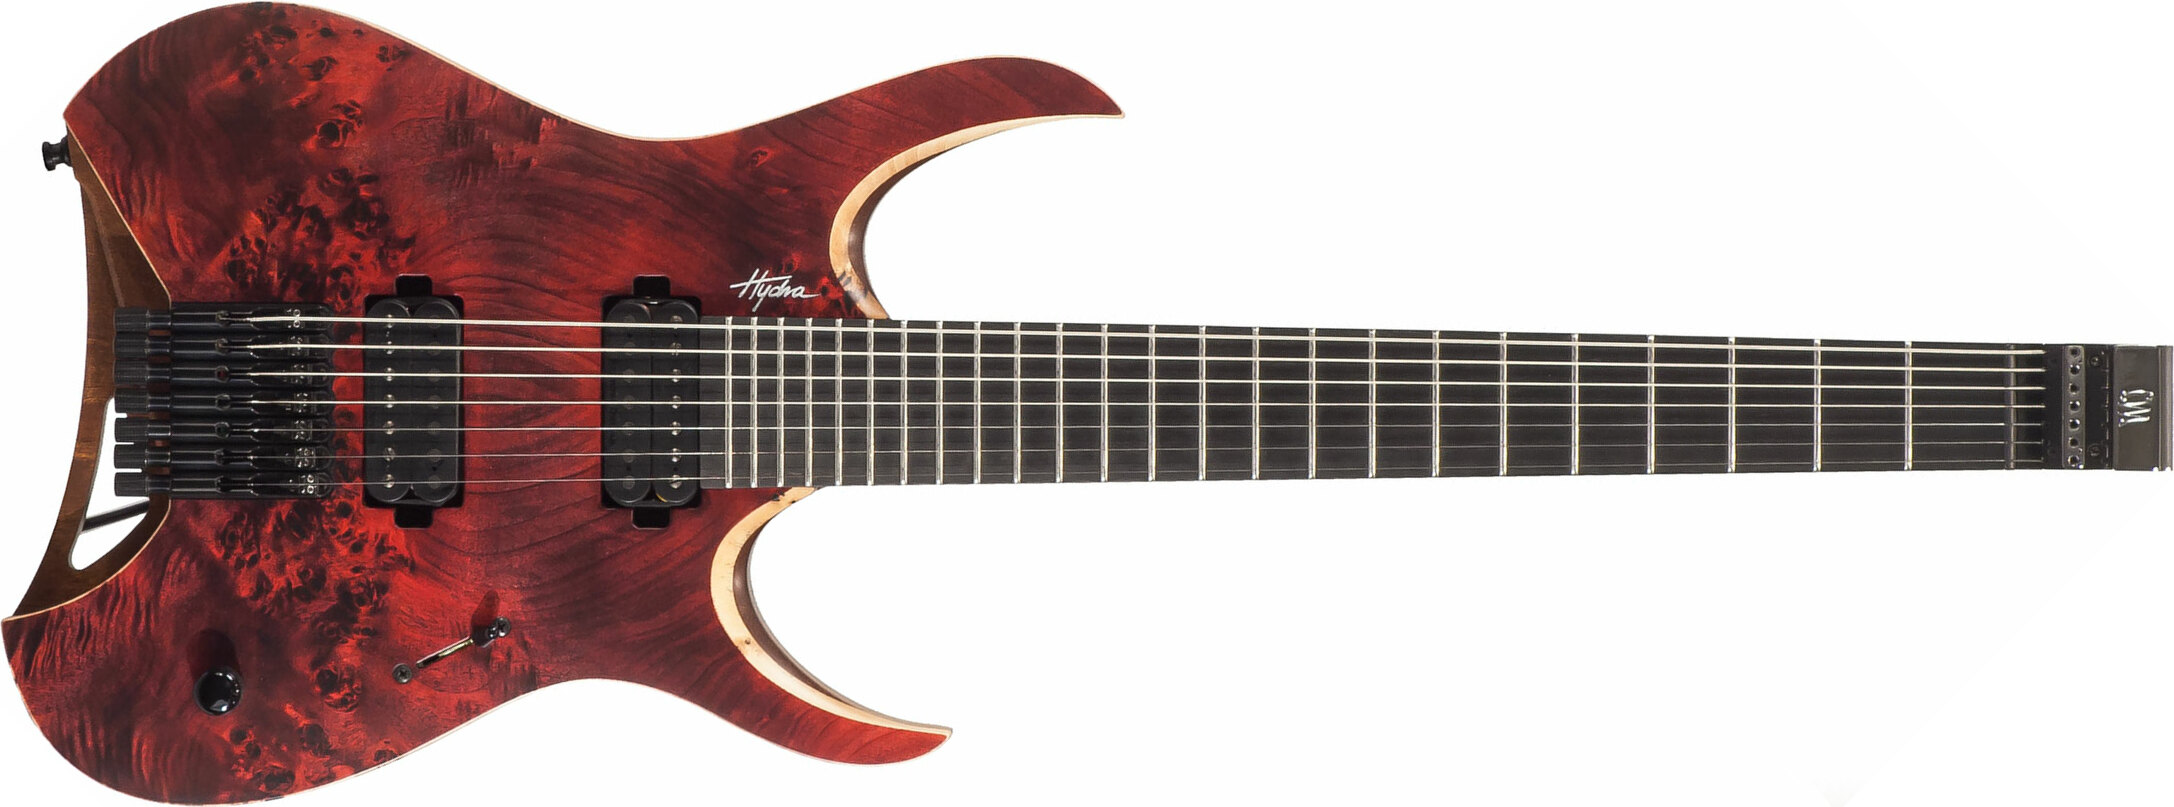 Mayones Guitars Hydra Elite 7 2h Seymour Duncan Ht Eb - Dirty Red Satin - Guitare Électrique 7 Cordes - Main picture